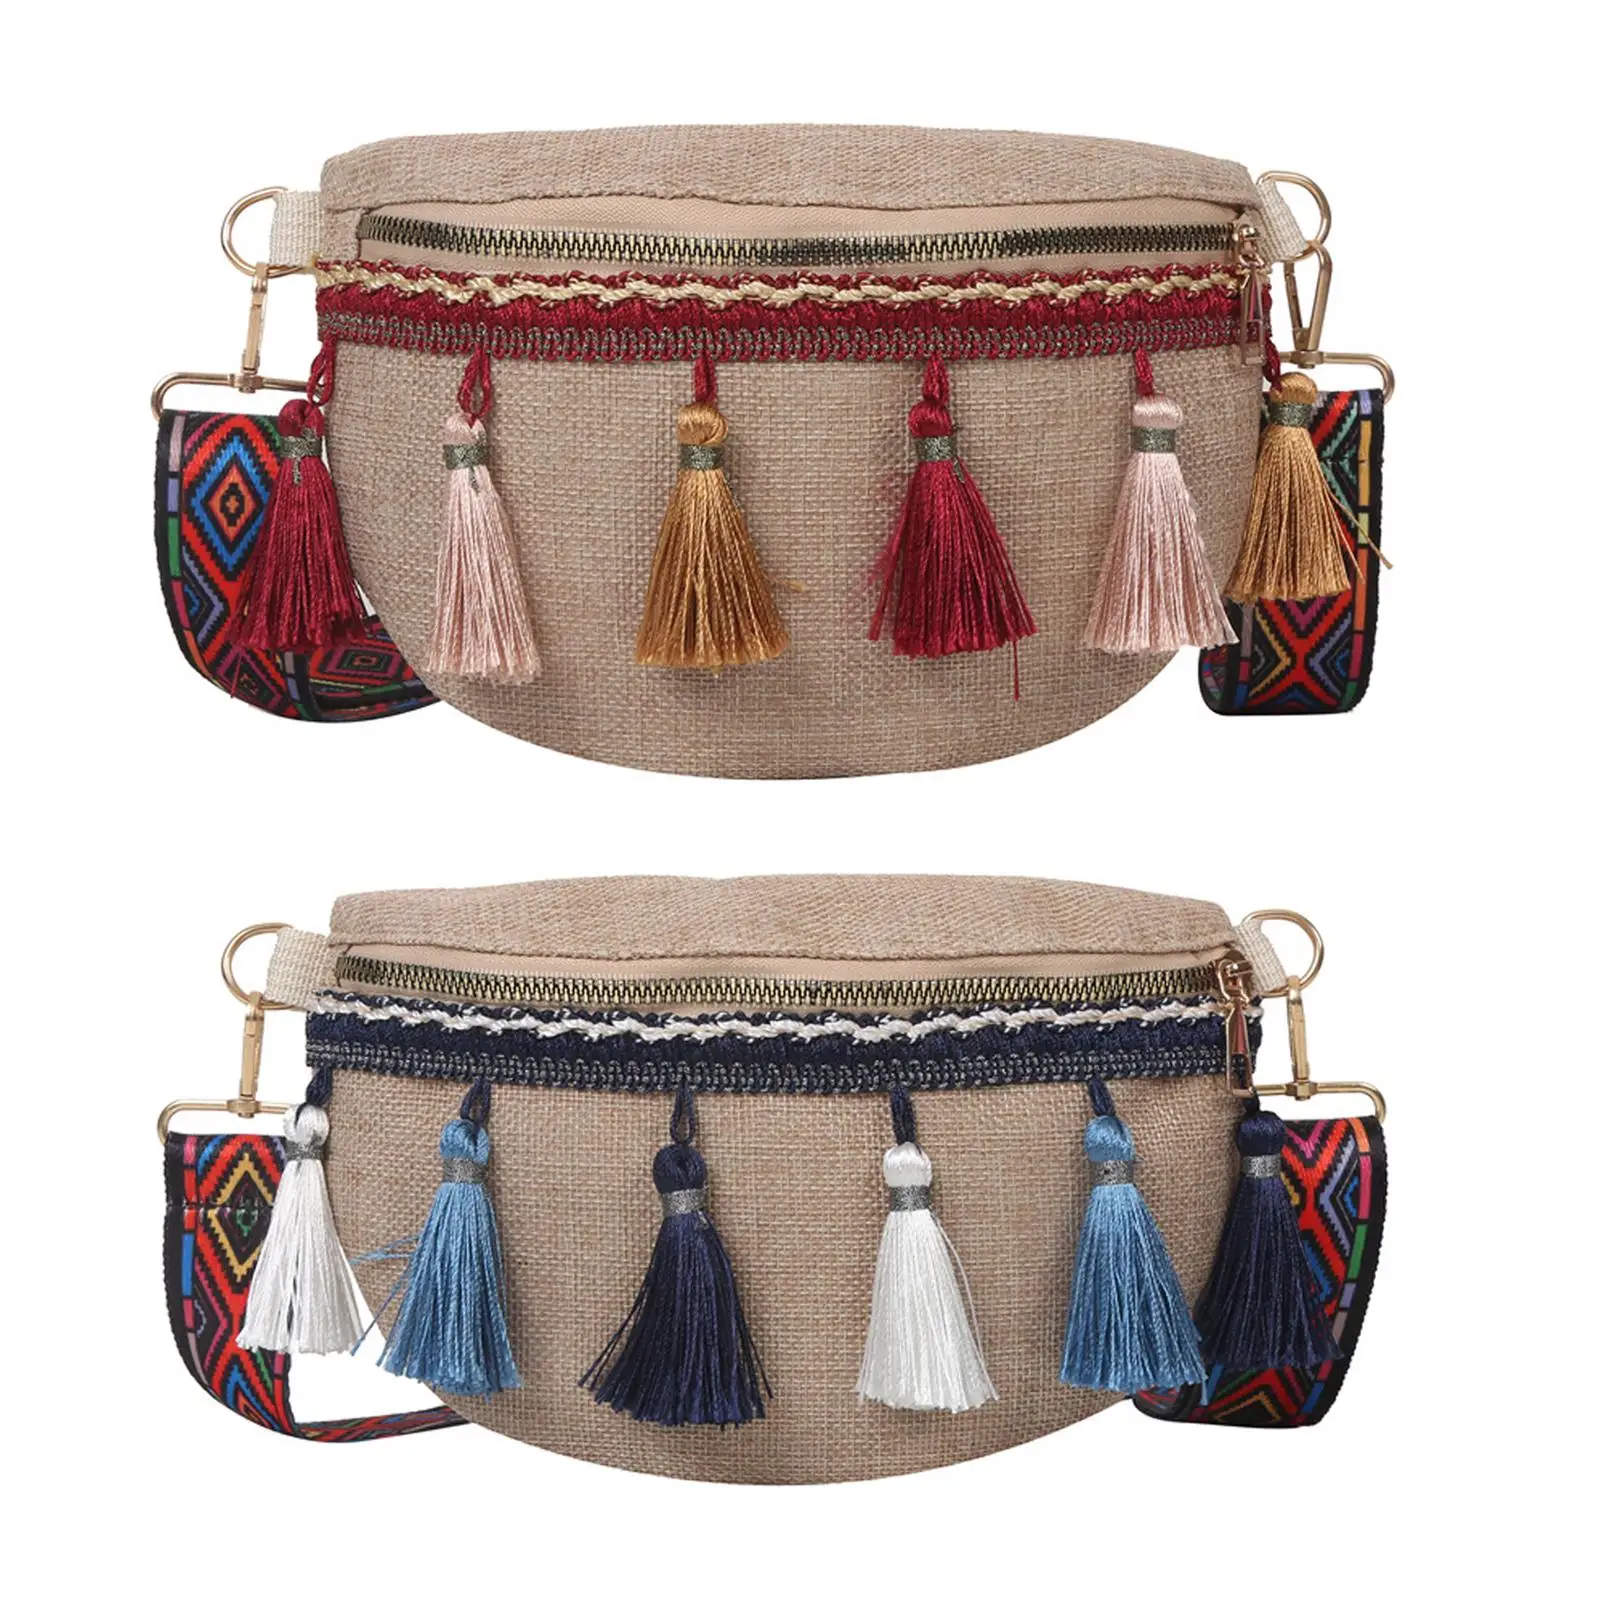 

Boho Fanny Pack Chest Bag Fashionable Purse Waistpack Ethnic Shoulder Bag Waist Bag for Summer Street Travel Shopping Outdoor